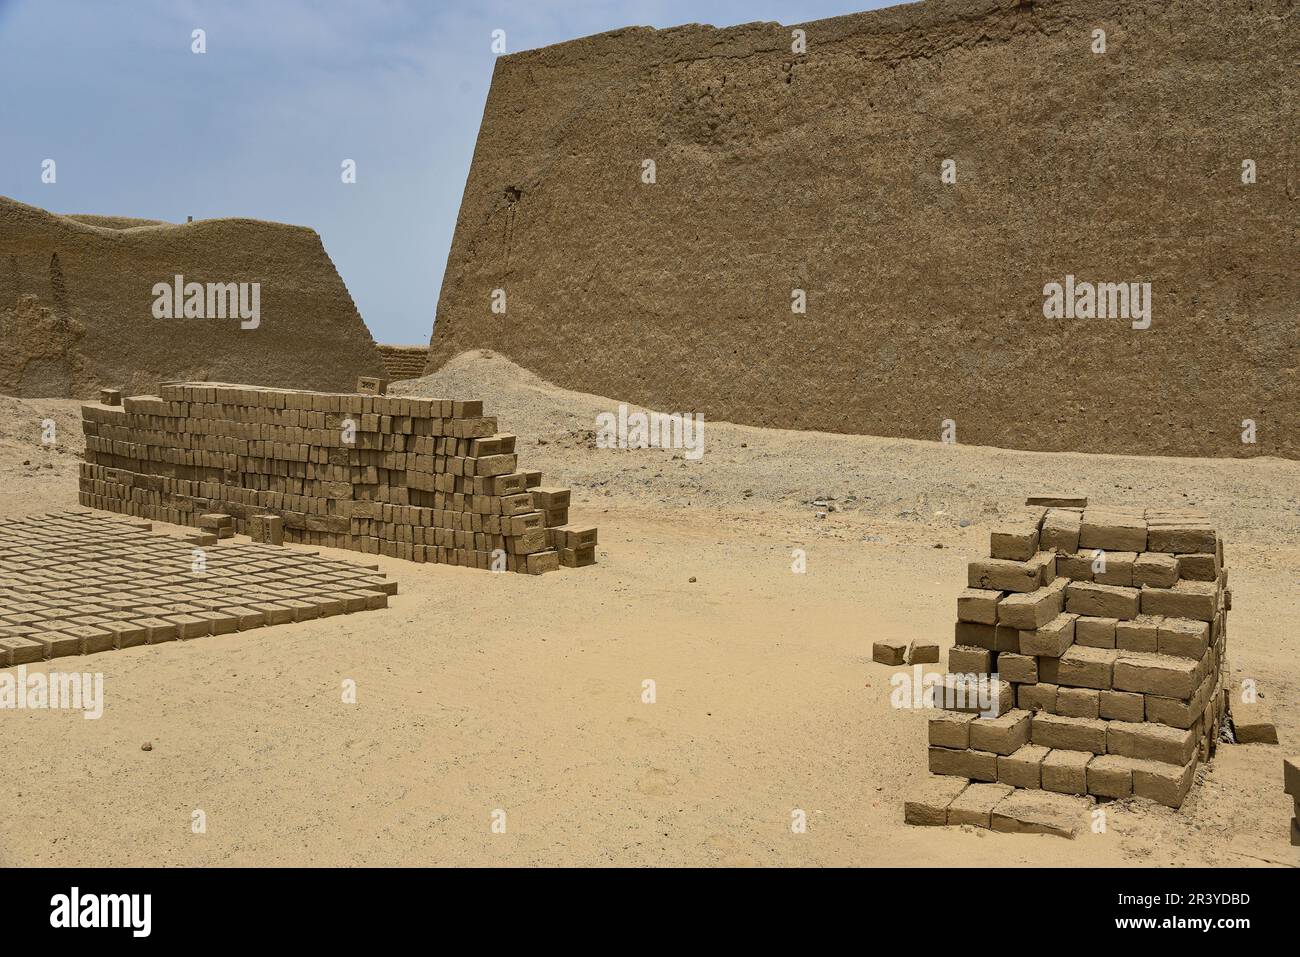 Nicolas Remene / Le Pictorium -  Chan Chan archaeological site in the province of Trujillo, Peru -  11/10/2018  -  Peru / La Libertad / Chan Chan - Hu Stock Photo